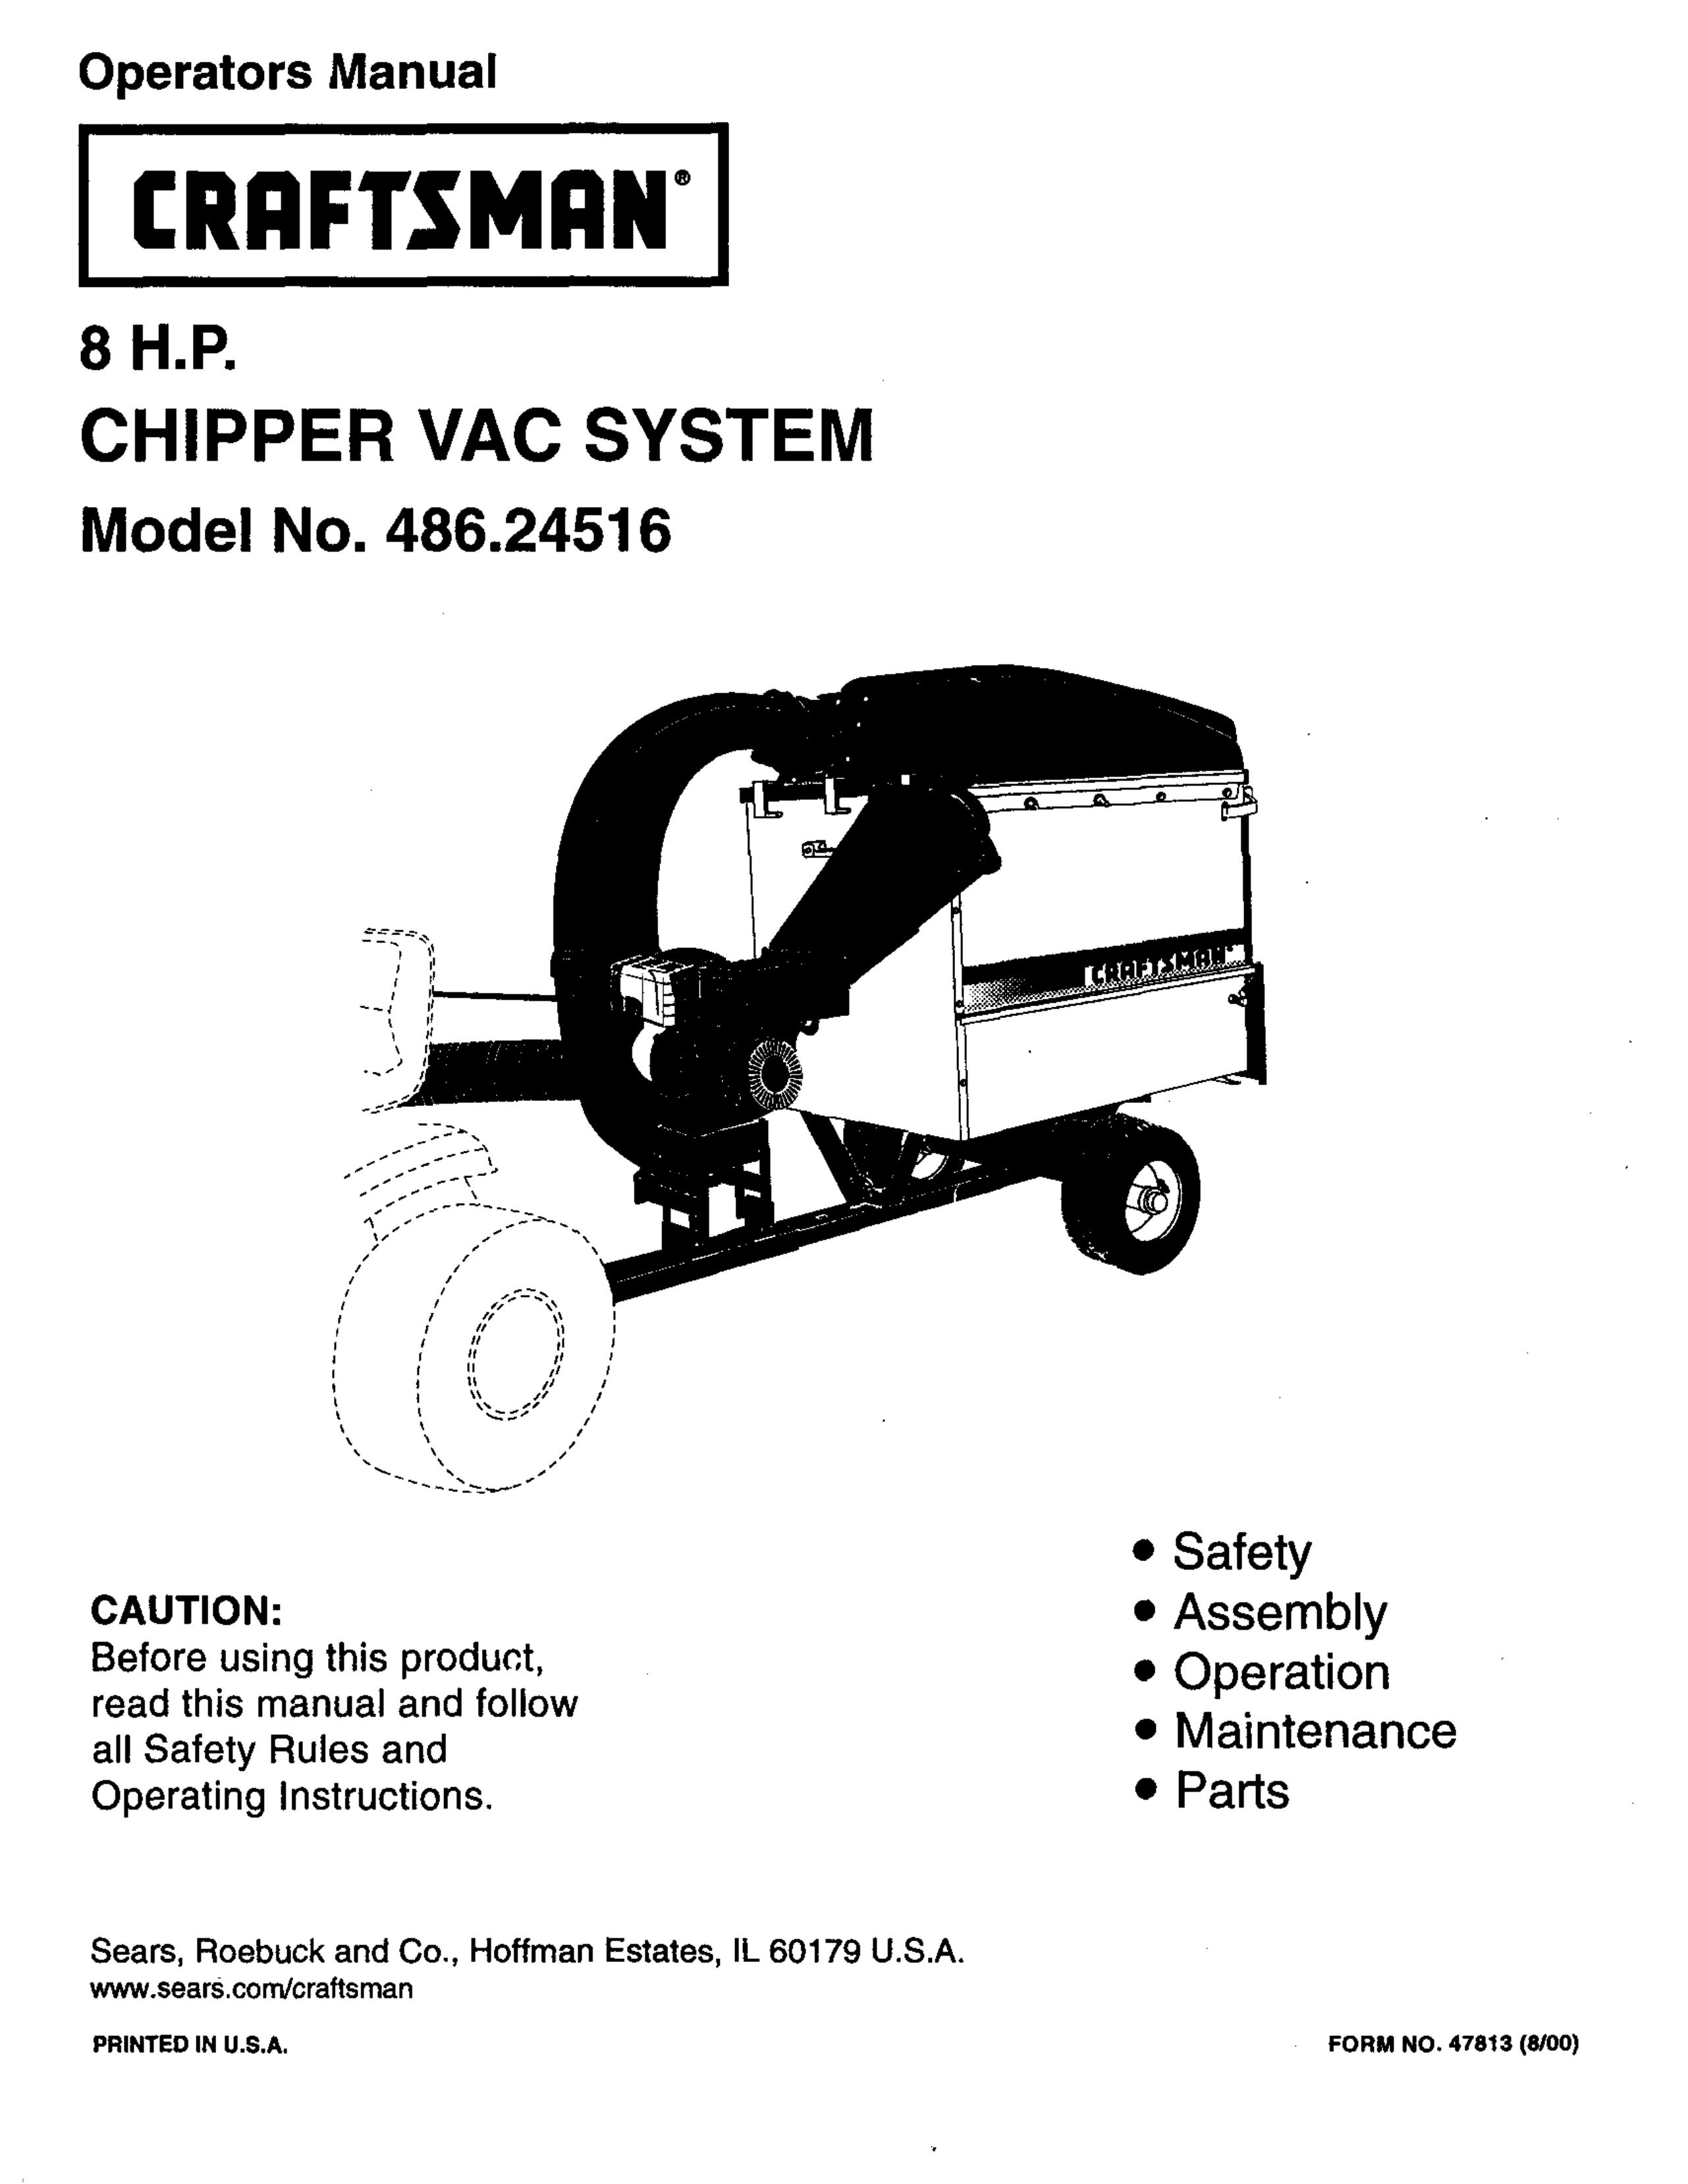 Craftsman 486.24516 Chipper User Manual